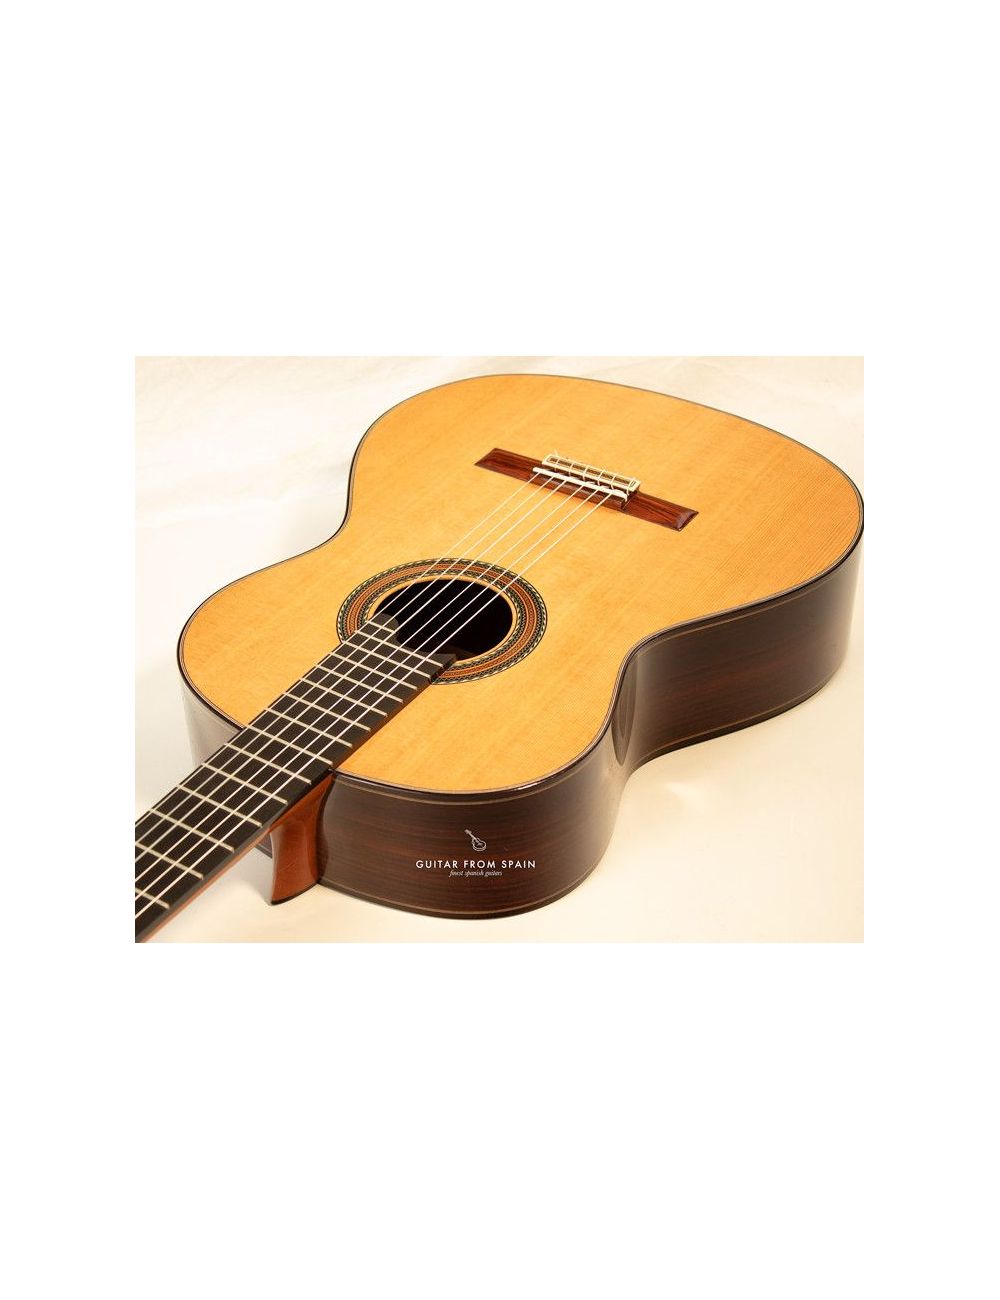 Alhambra JMM Serie C Classical guitar JMM Serie C 250 Premium Classical